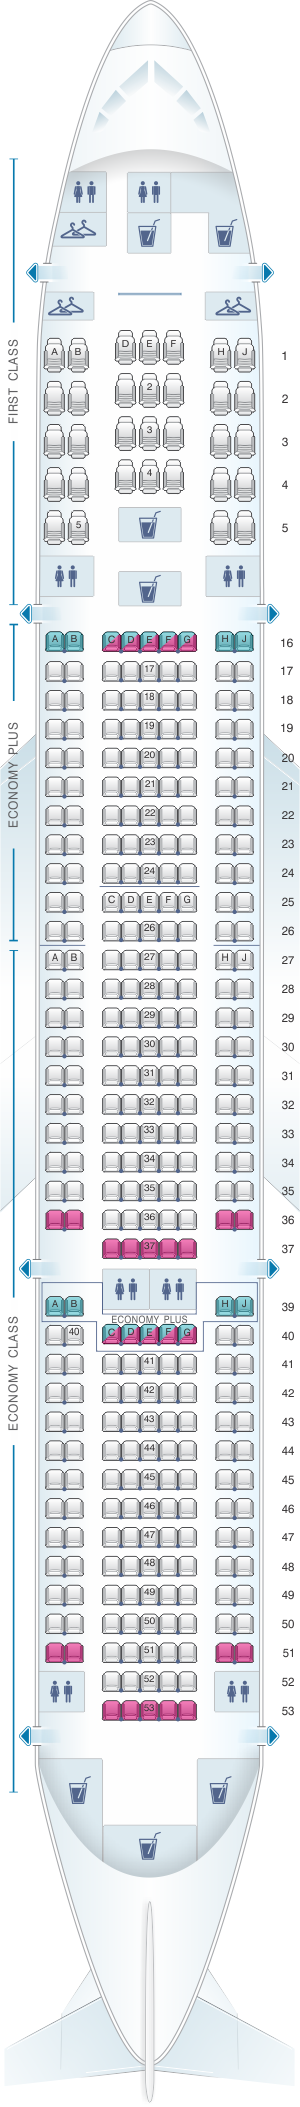 United Boeing 777 Seat Layout